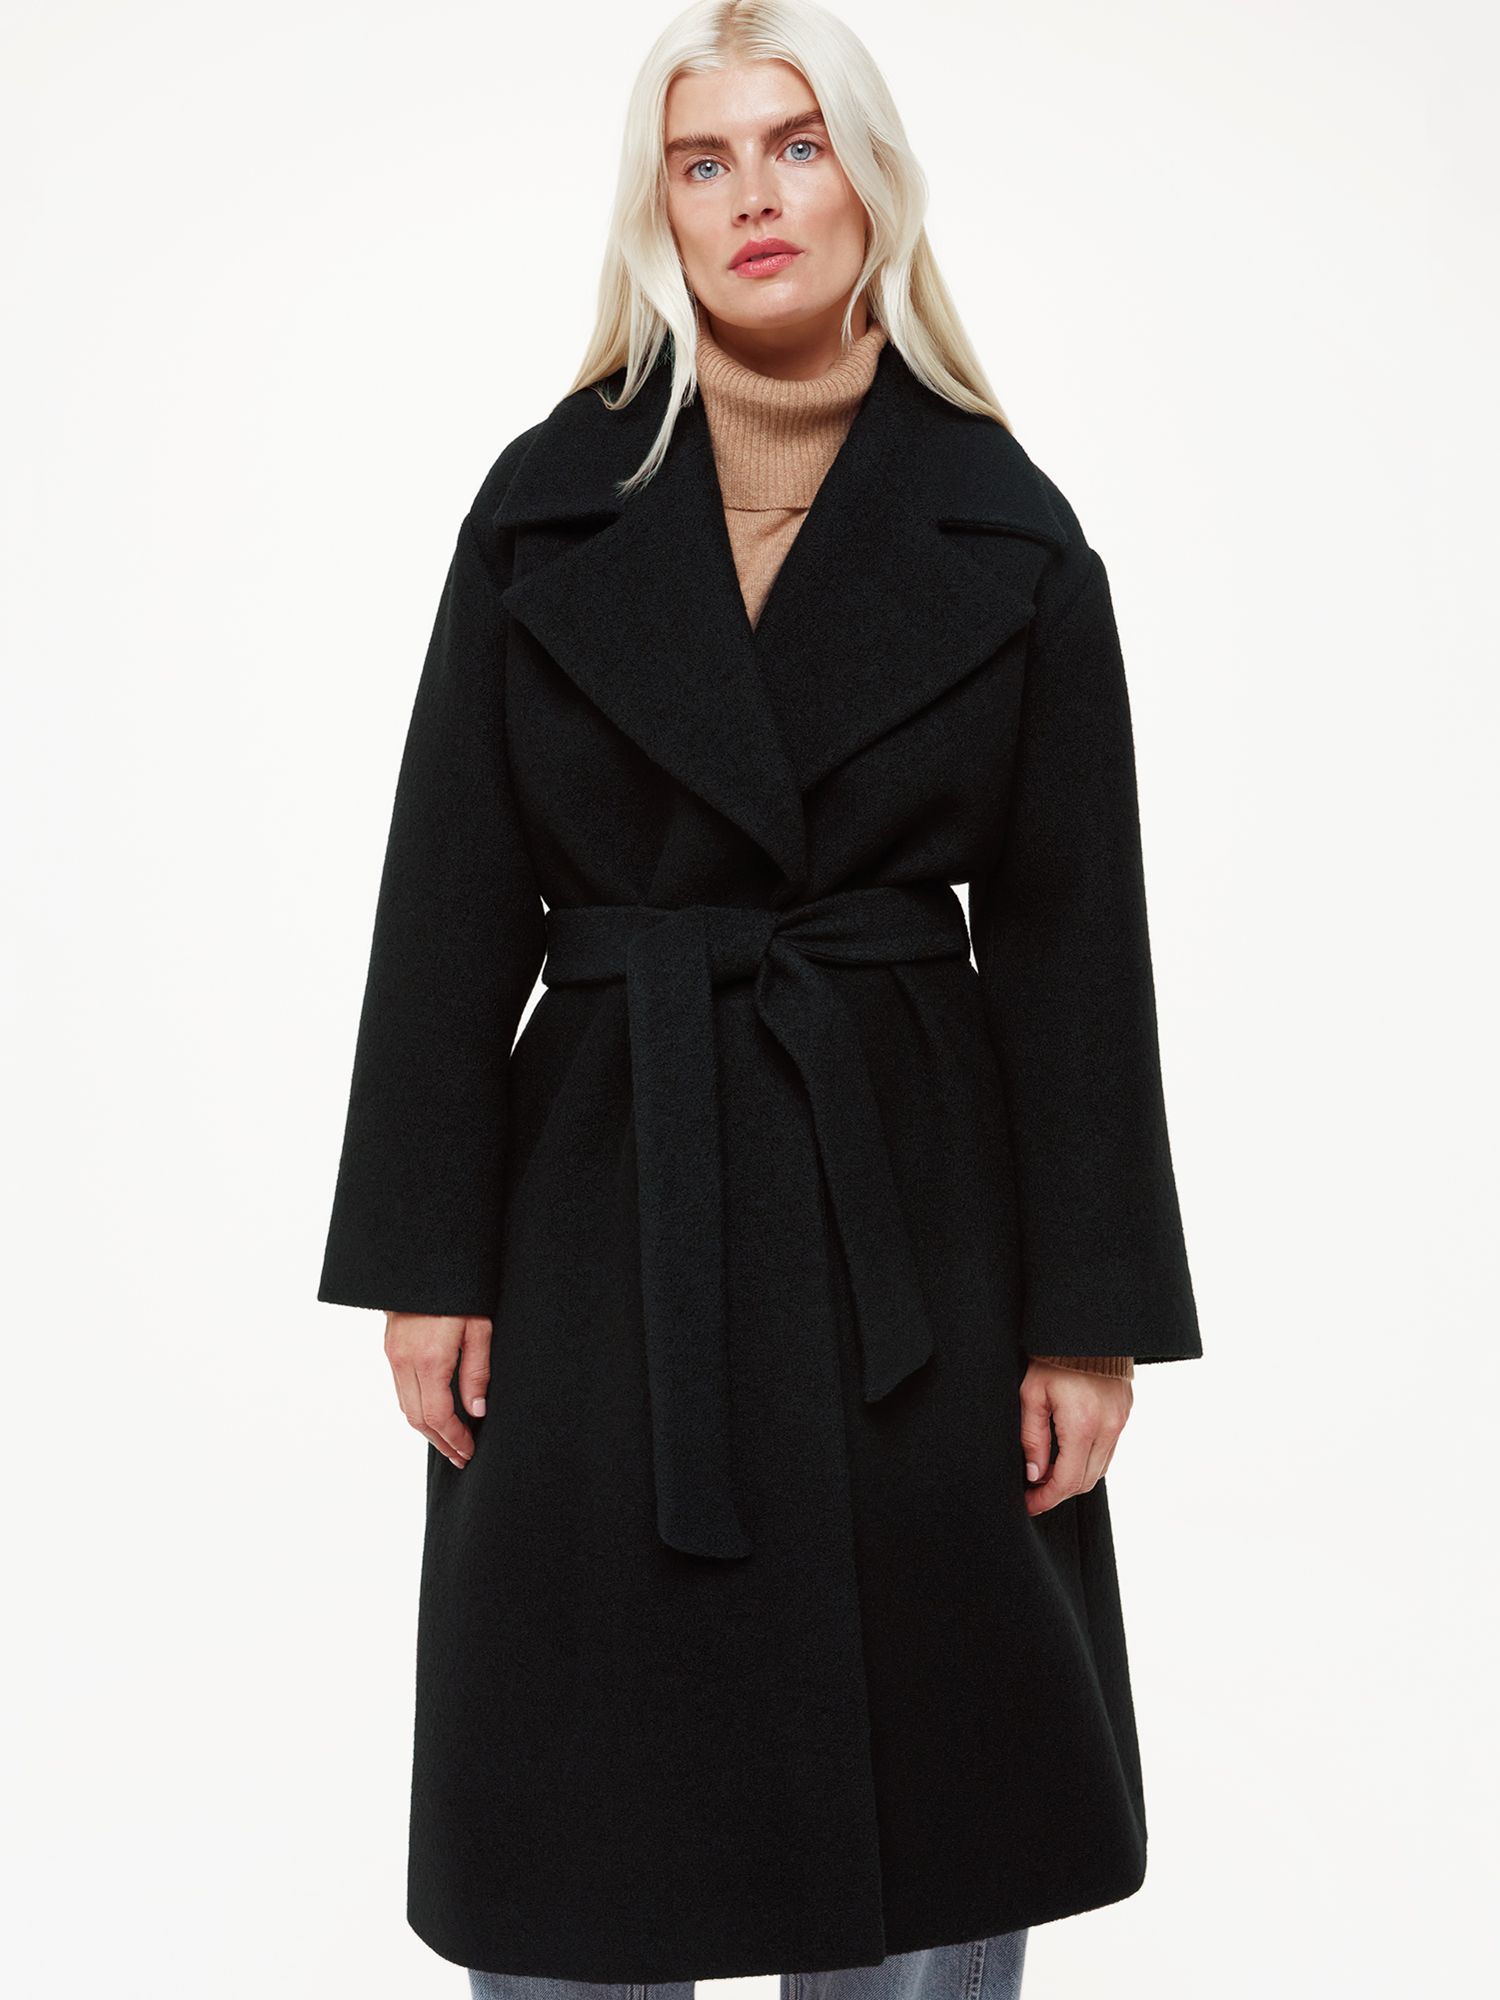 Whistles Petite Lorna Wrap Wool Coat, Black at John Lewis & Partners